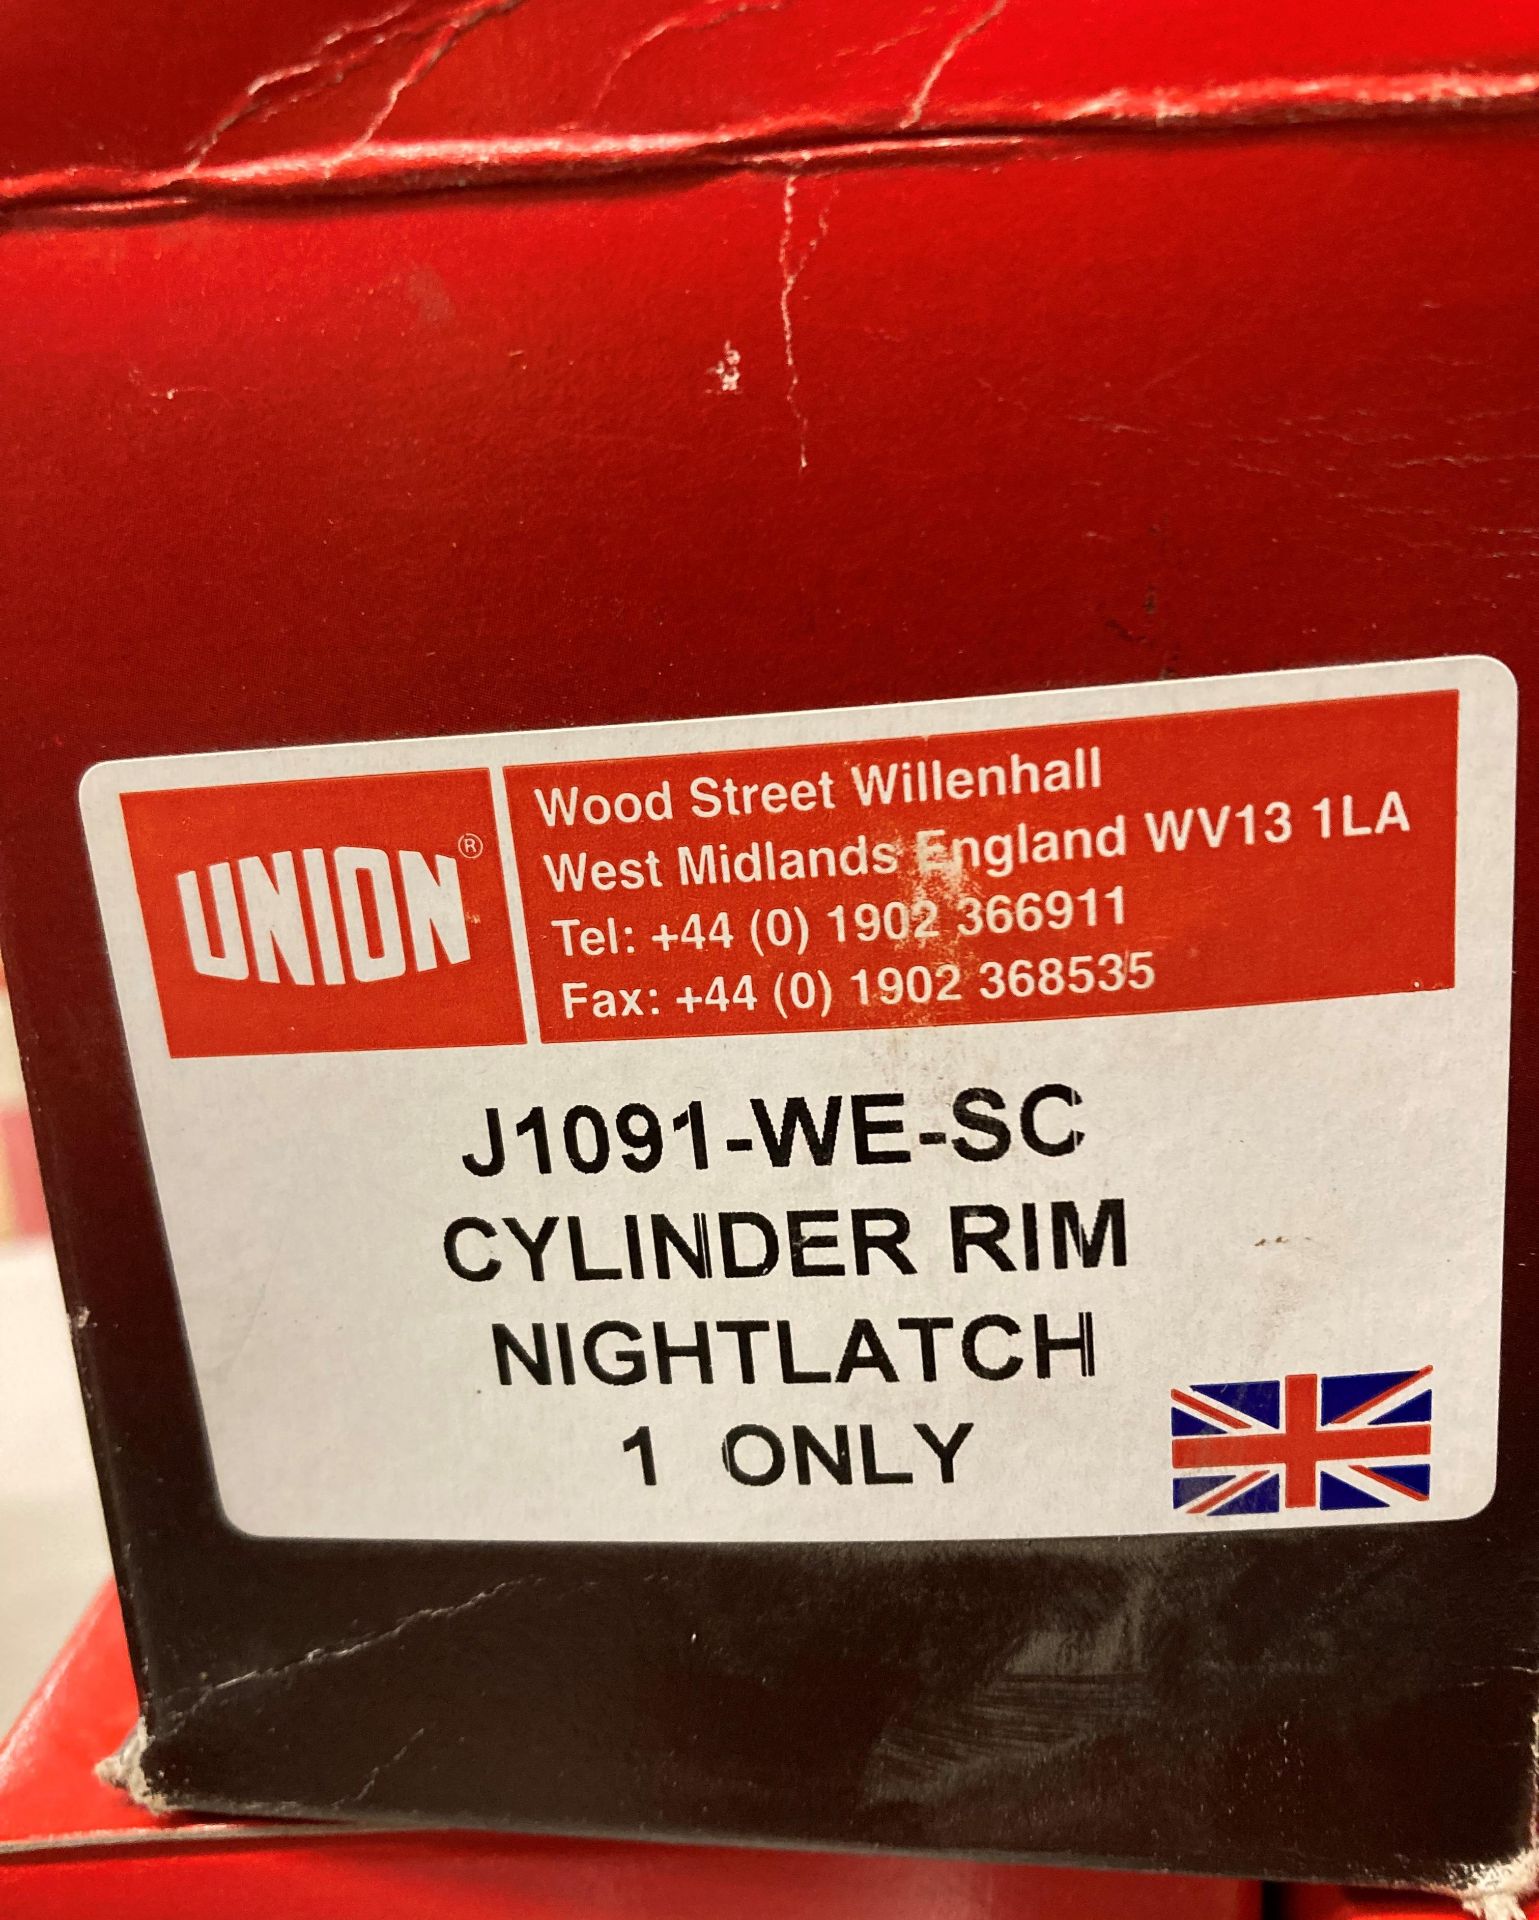 5 x J1091-WE-5C Cylinder Rim Nightlatch - 1 per box (J13) - Image 3 of 3